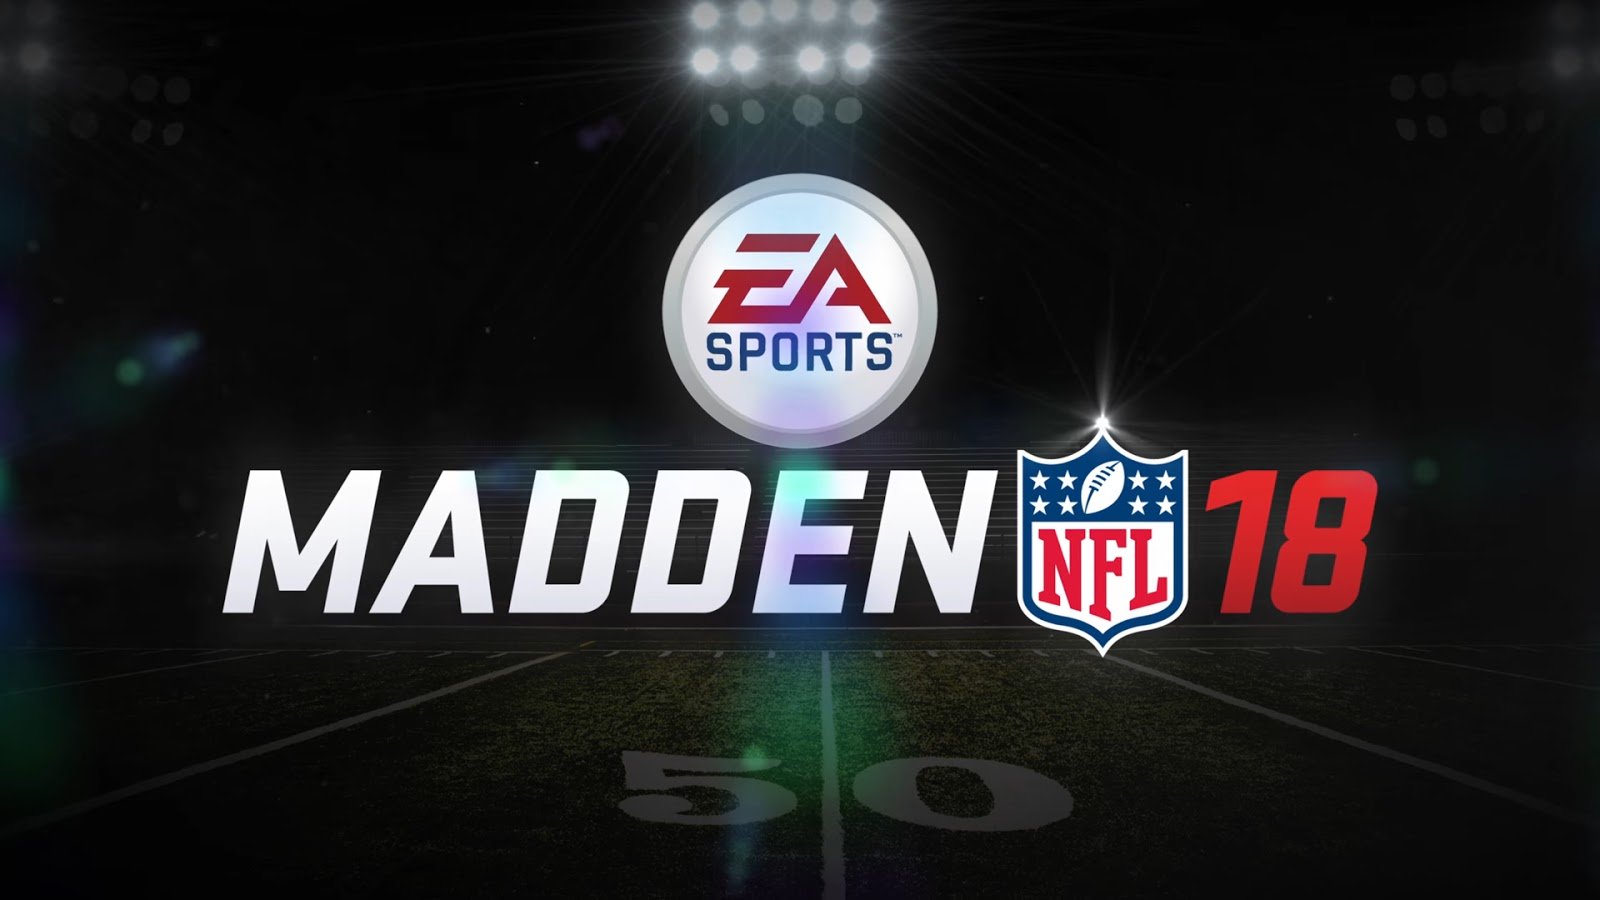 Madden NFL 18 Xbox One 2